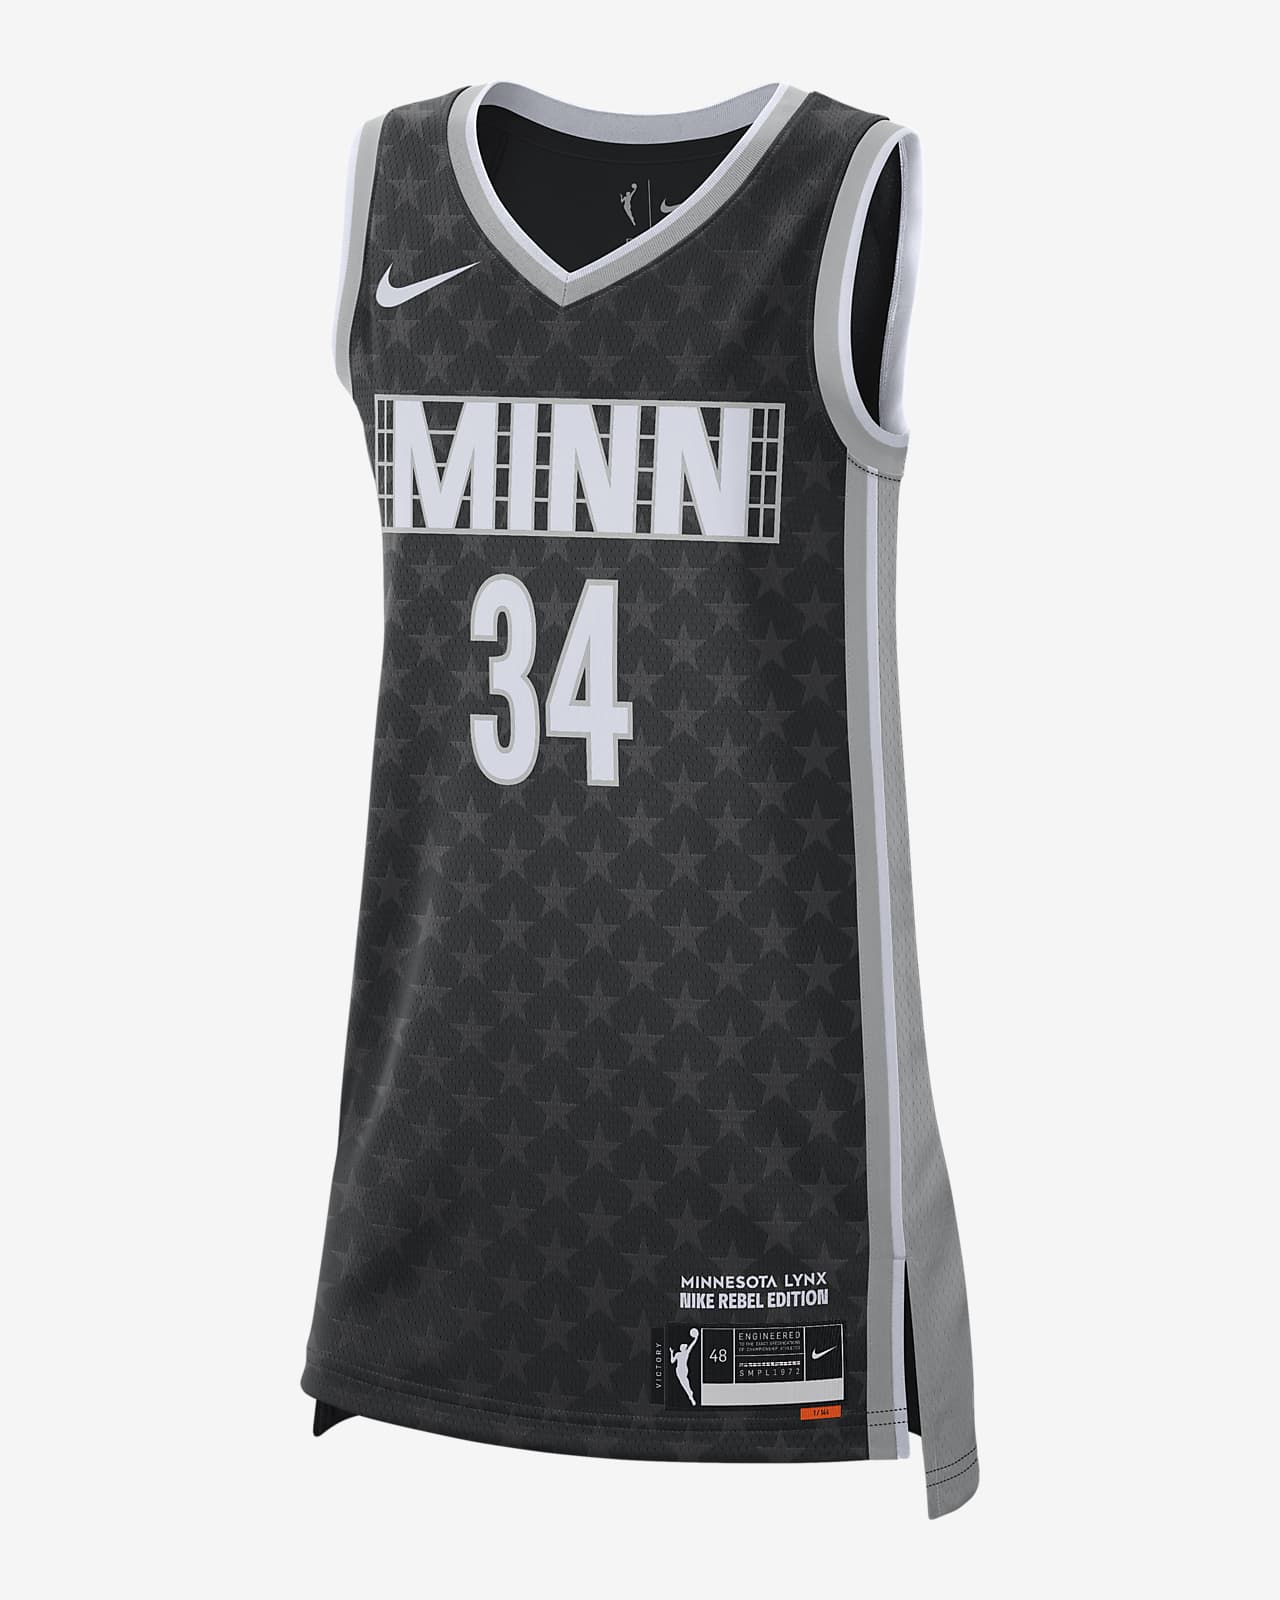 Camiseta Nike Dri-FIT WNBA Victory Sylvia Fowles Lynx Rebel Edition